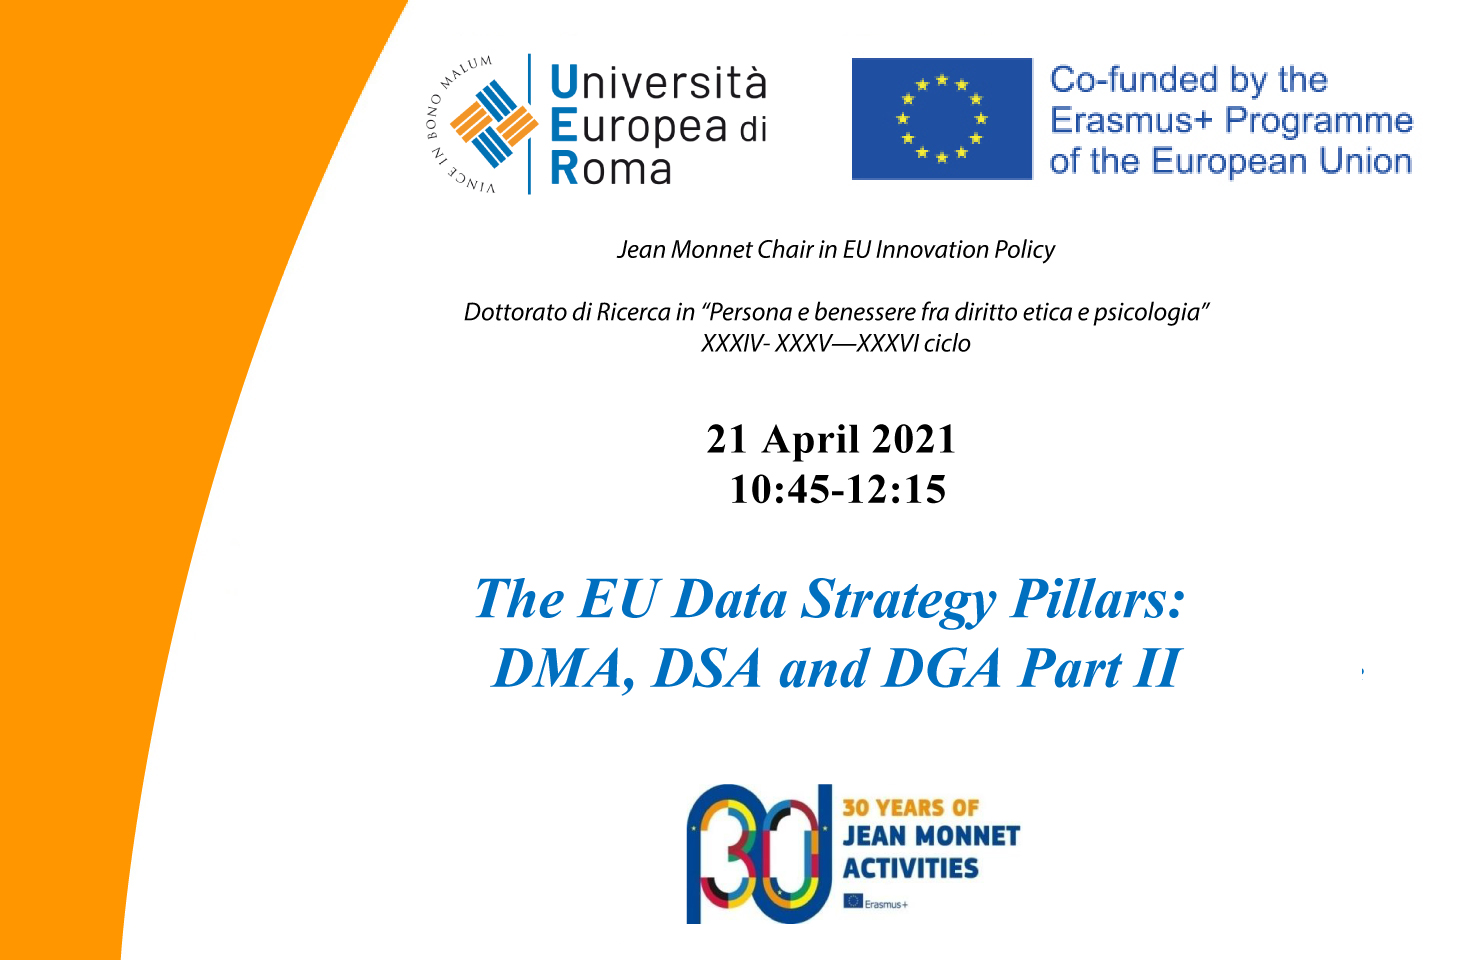 The EU Data Strategy Pillars: DMA, DSA and DGA Part II